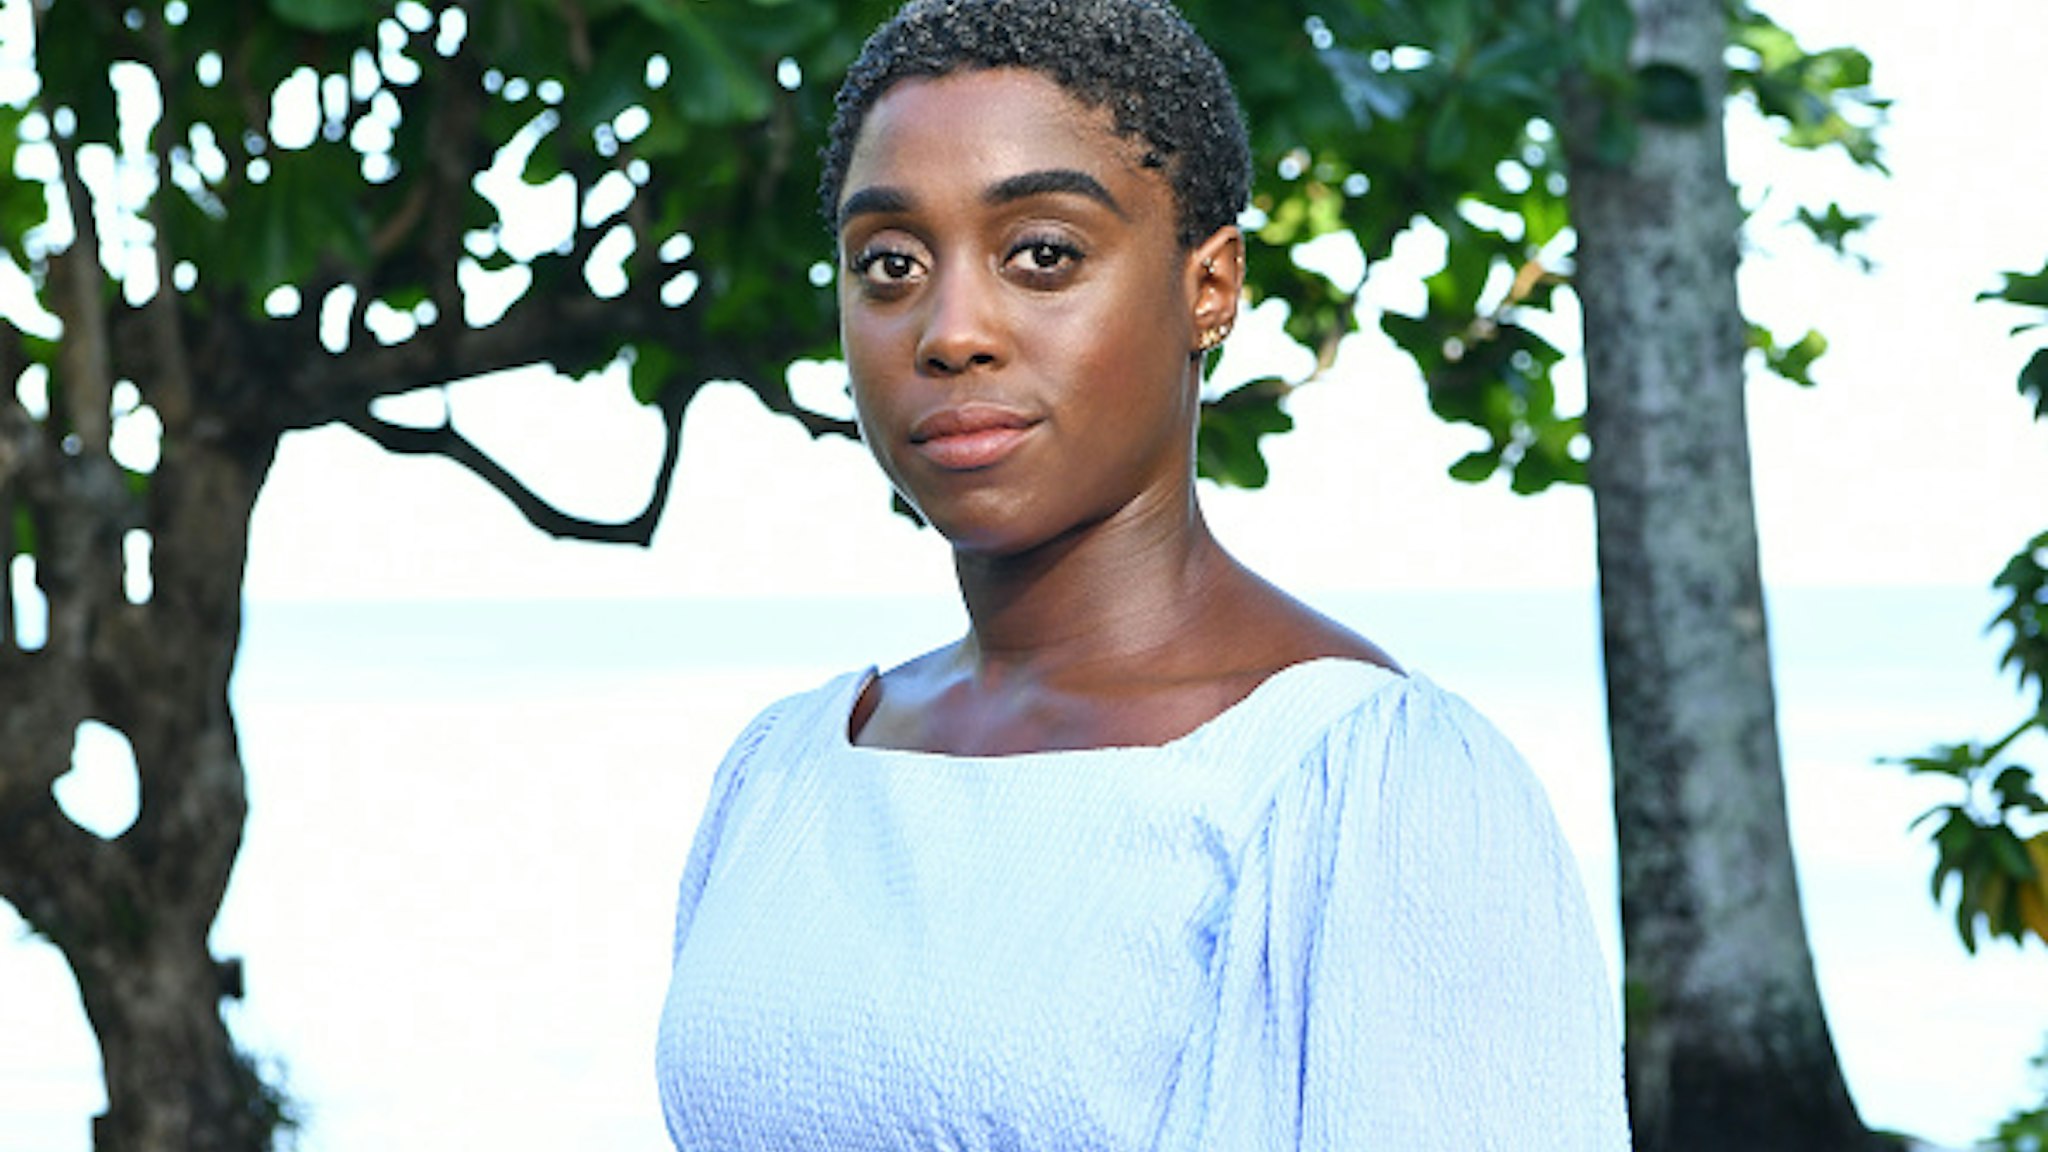 MONTEGO BAY, JAMAICA - APRIL 25: Cast member Lashana Lynch attends the "Bond 25" film launch at Ian Fleming's home "GoldenEye" on April 25, 2019 in Montego Bay, Jamaica.